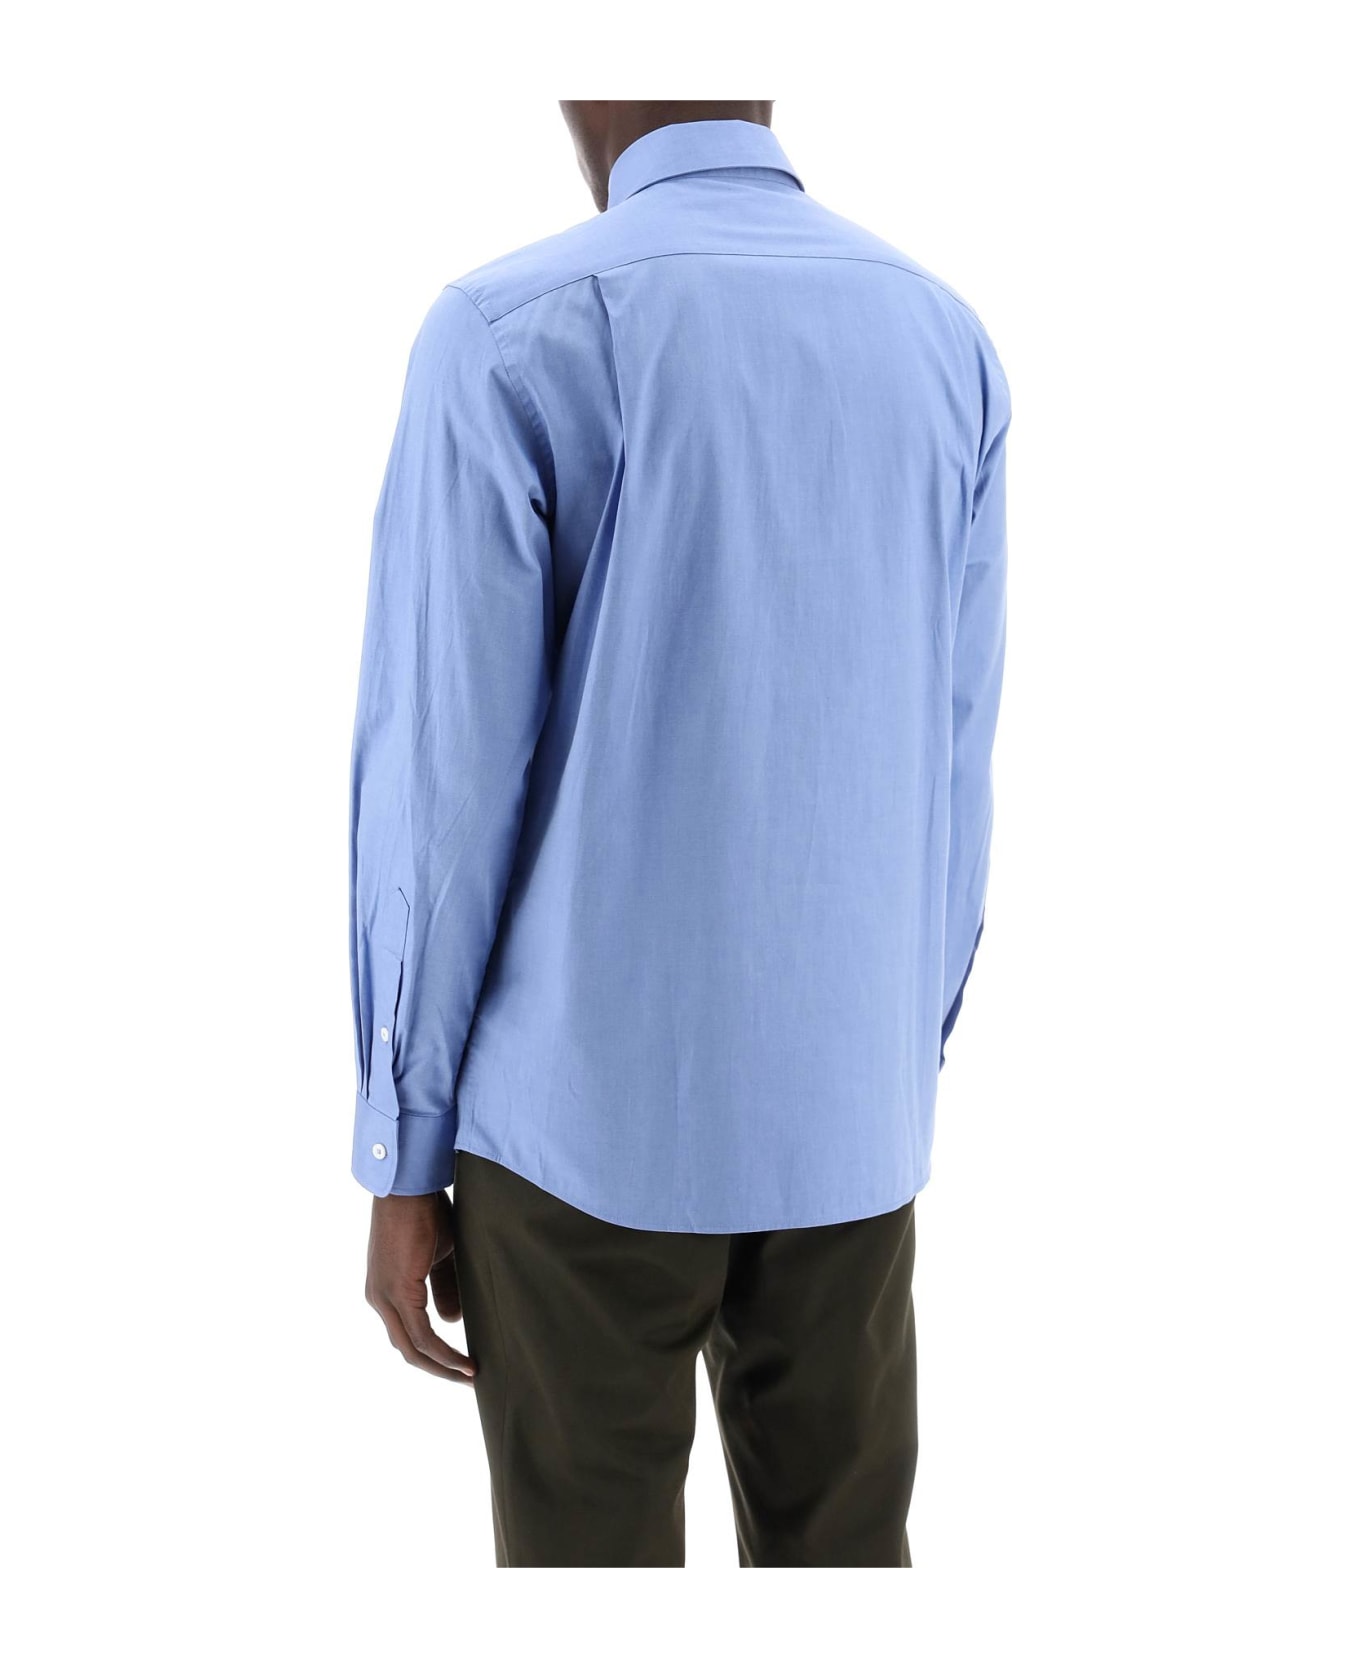 Vivienne Westwood Two Button Krall Shirt - BLUE (Blue)